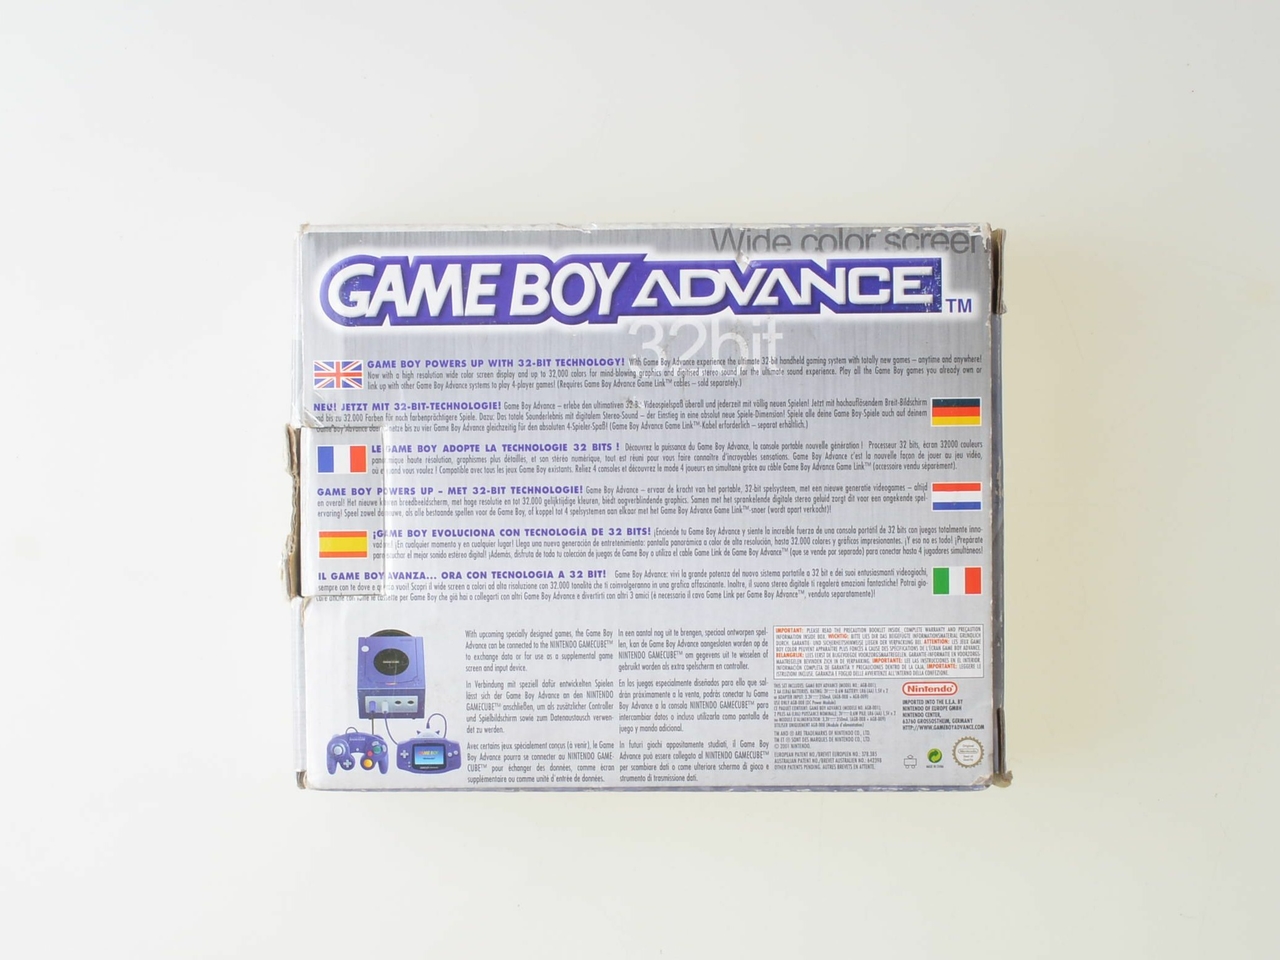 Gameboy Advance Transparent Blue [Complete] - Gameboy Advance Hardware - 2